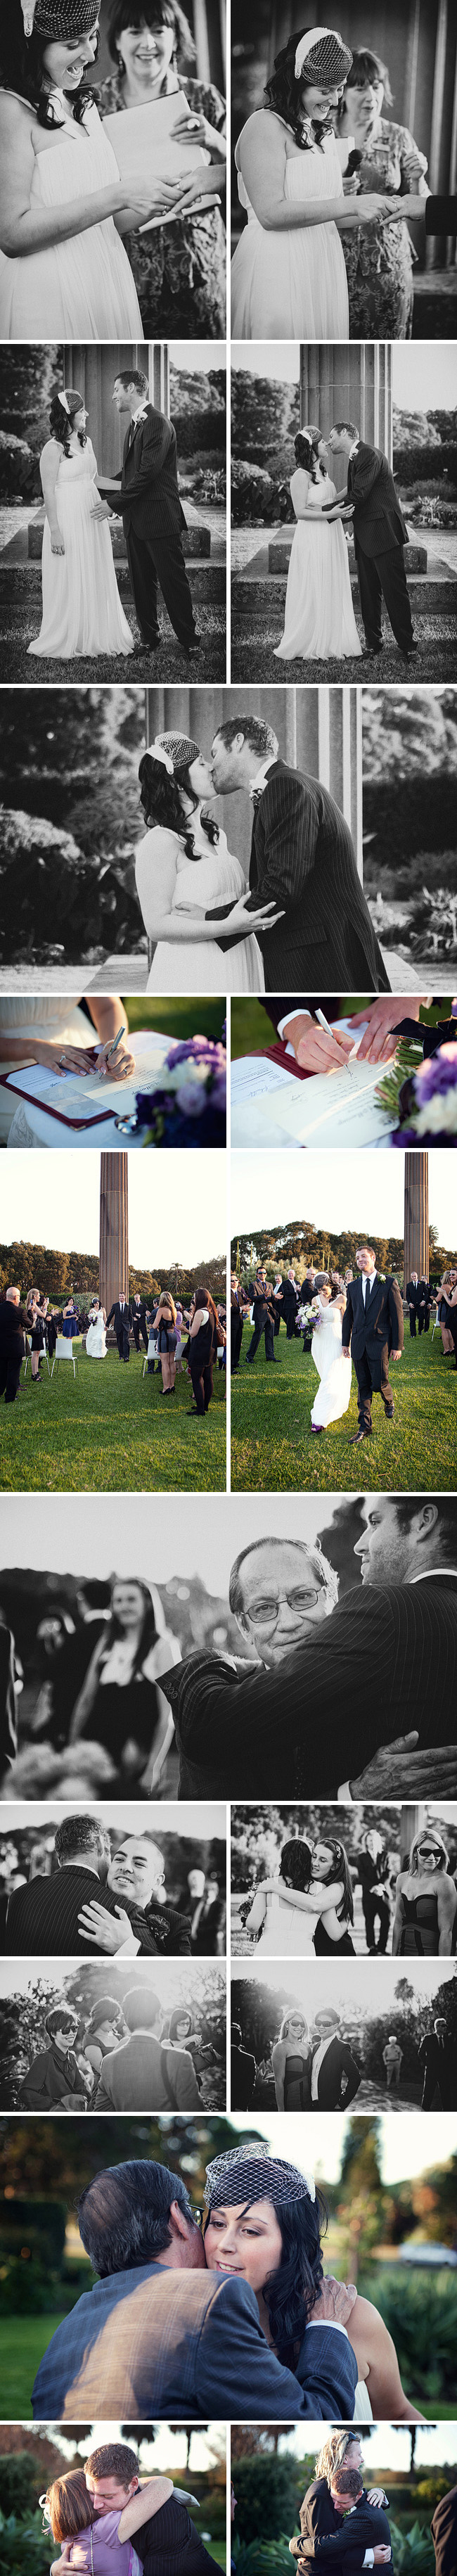 Centennial Parklands Wedding Photography - Jennifer and Hamish's Wedding Ceremony